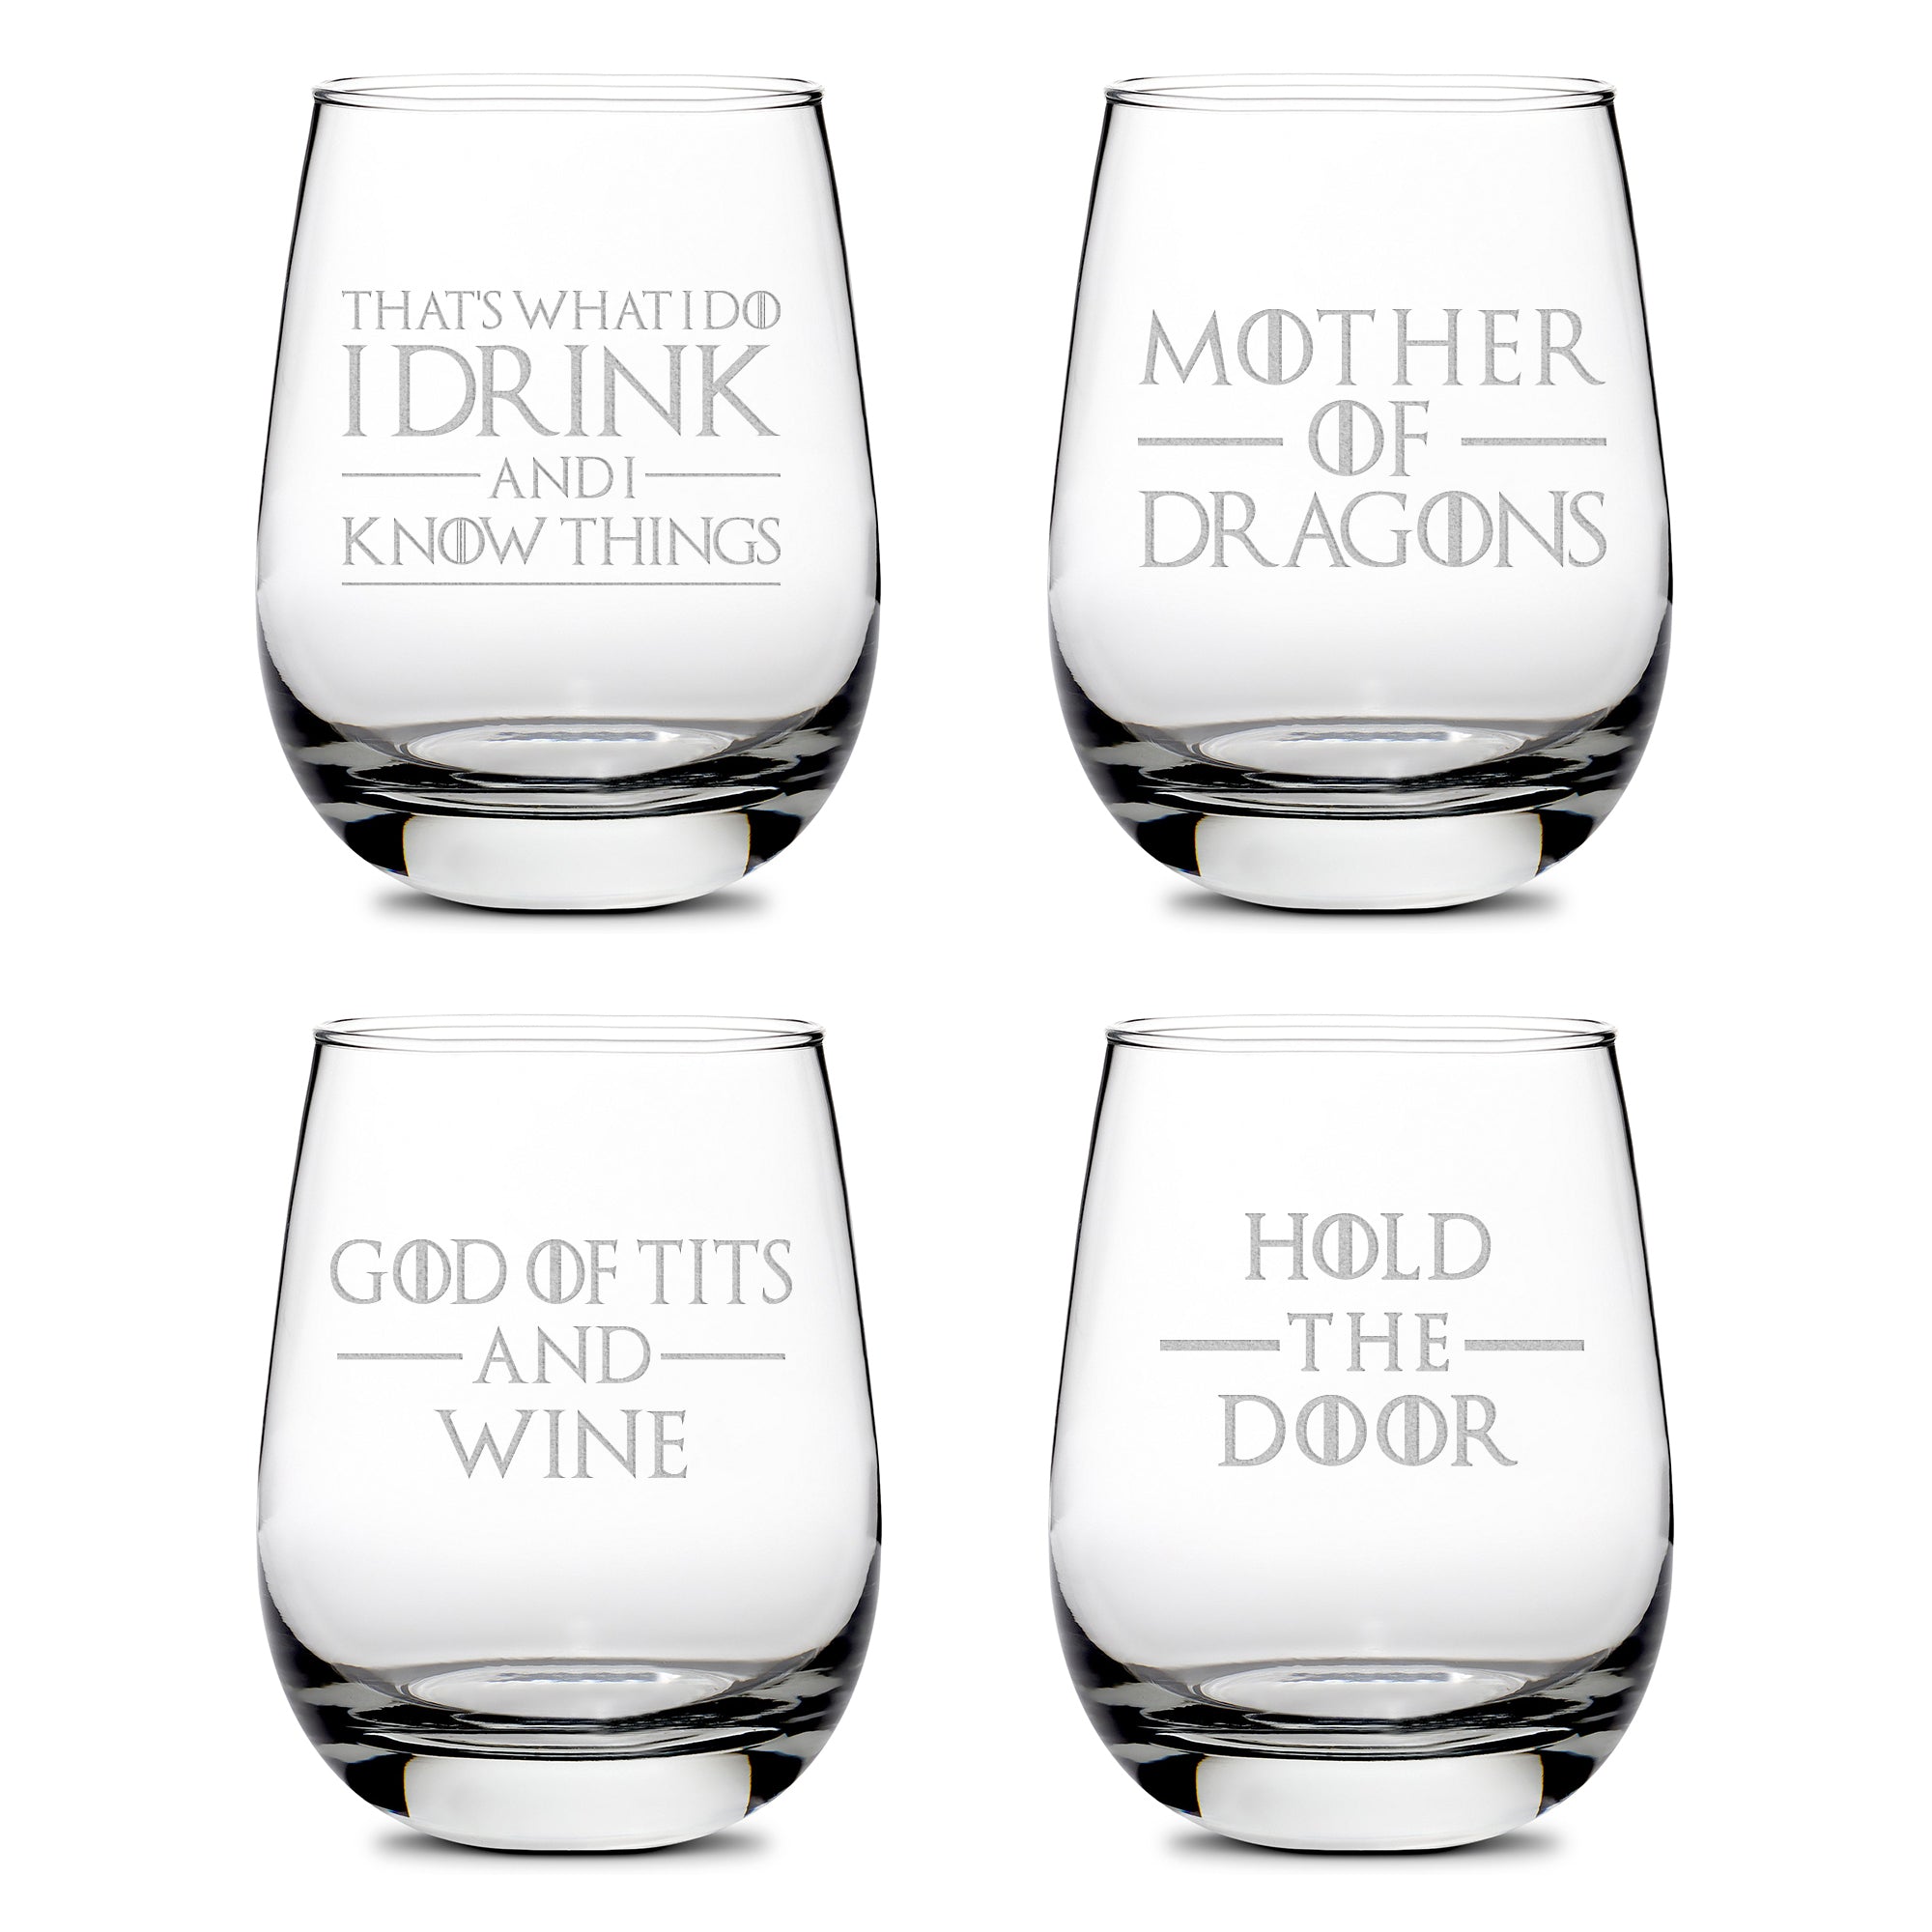 Premium Wine Glass, Game of Thrones, Quote Selection, 16oz